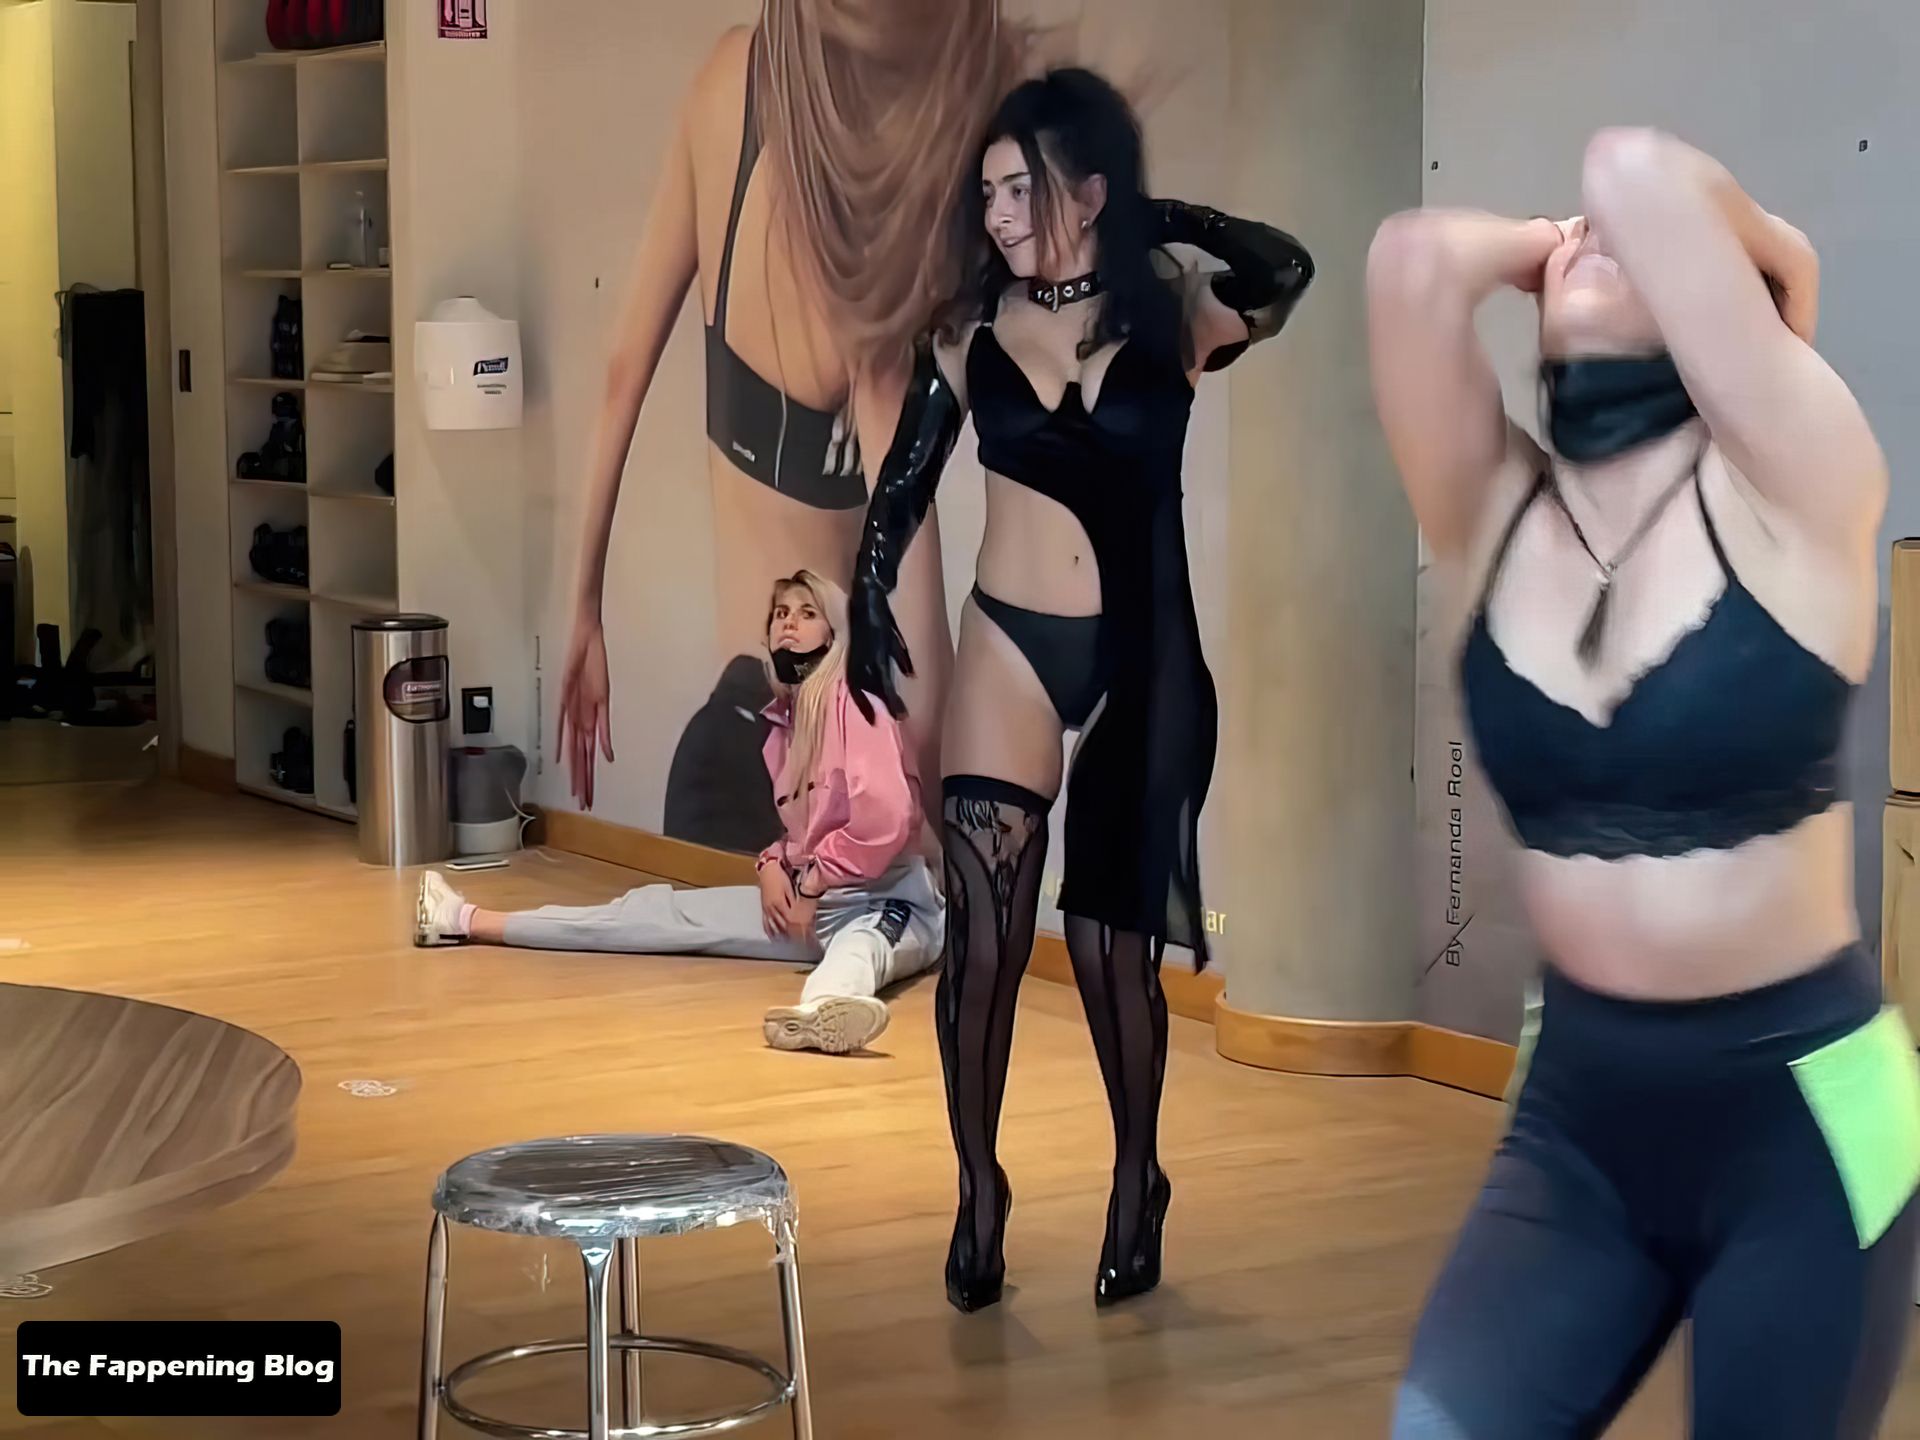 Charli XCX Sexy Behind-The-Scenes - Good Ones (21 Pics + Videos)